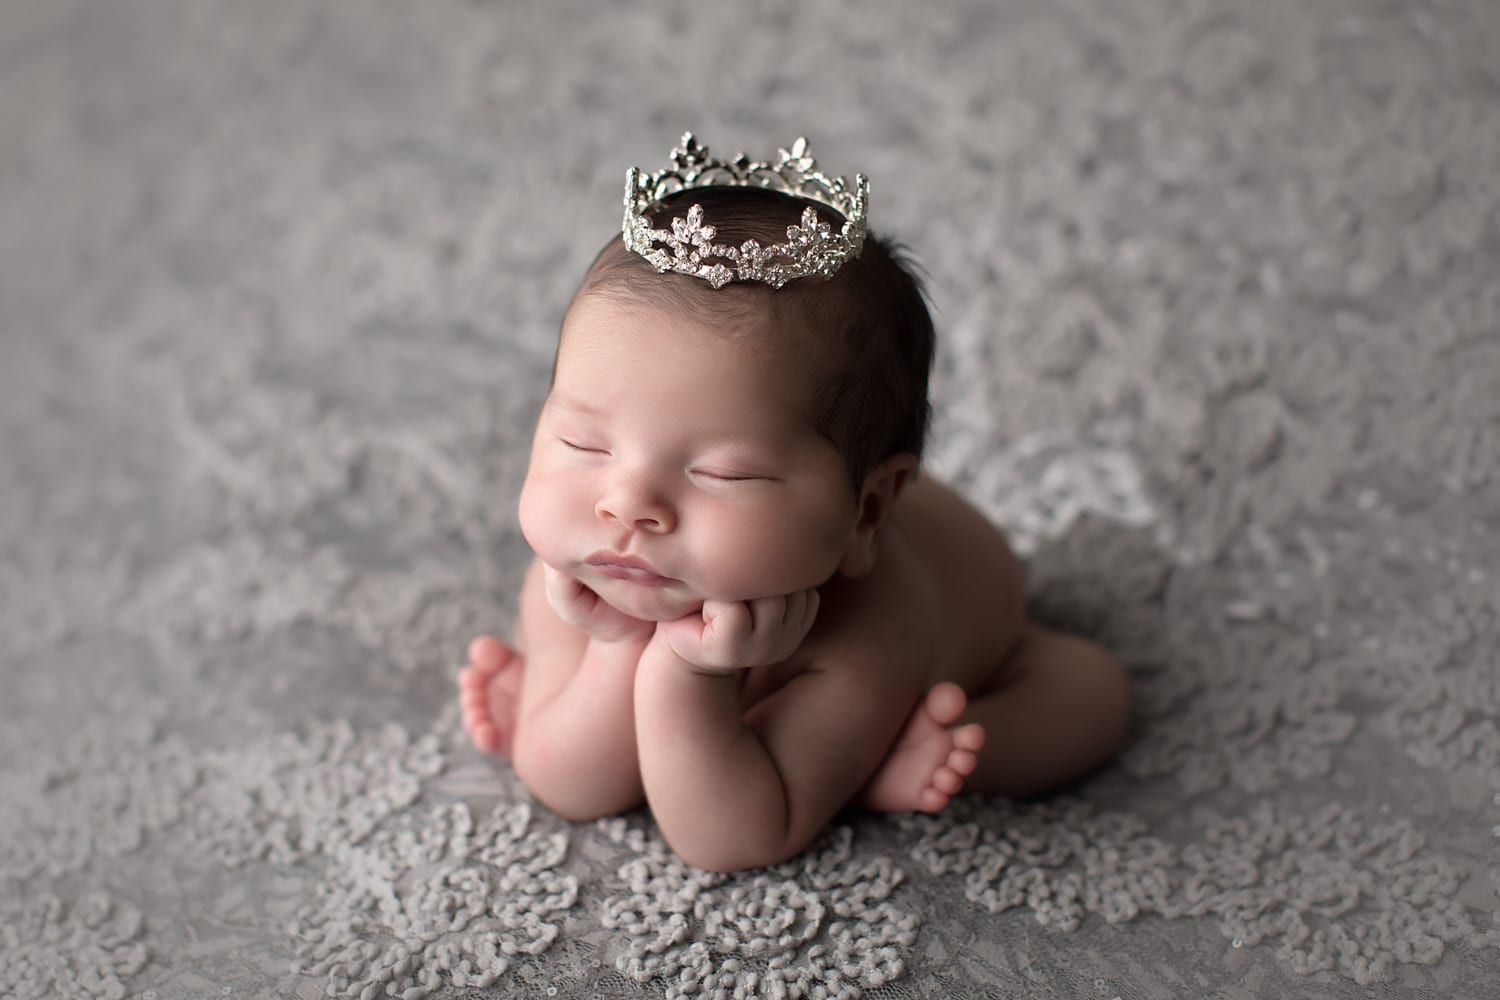 Portland Newborn Photographer Side angle froggy pose with tiara